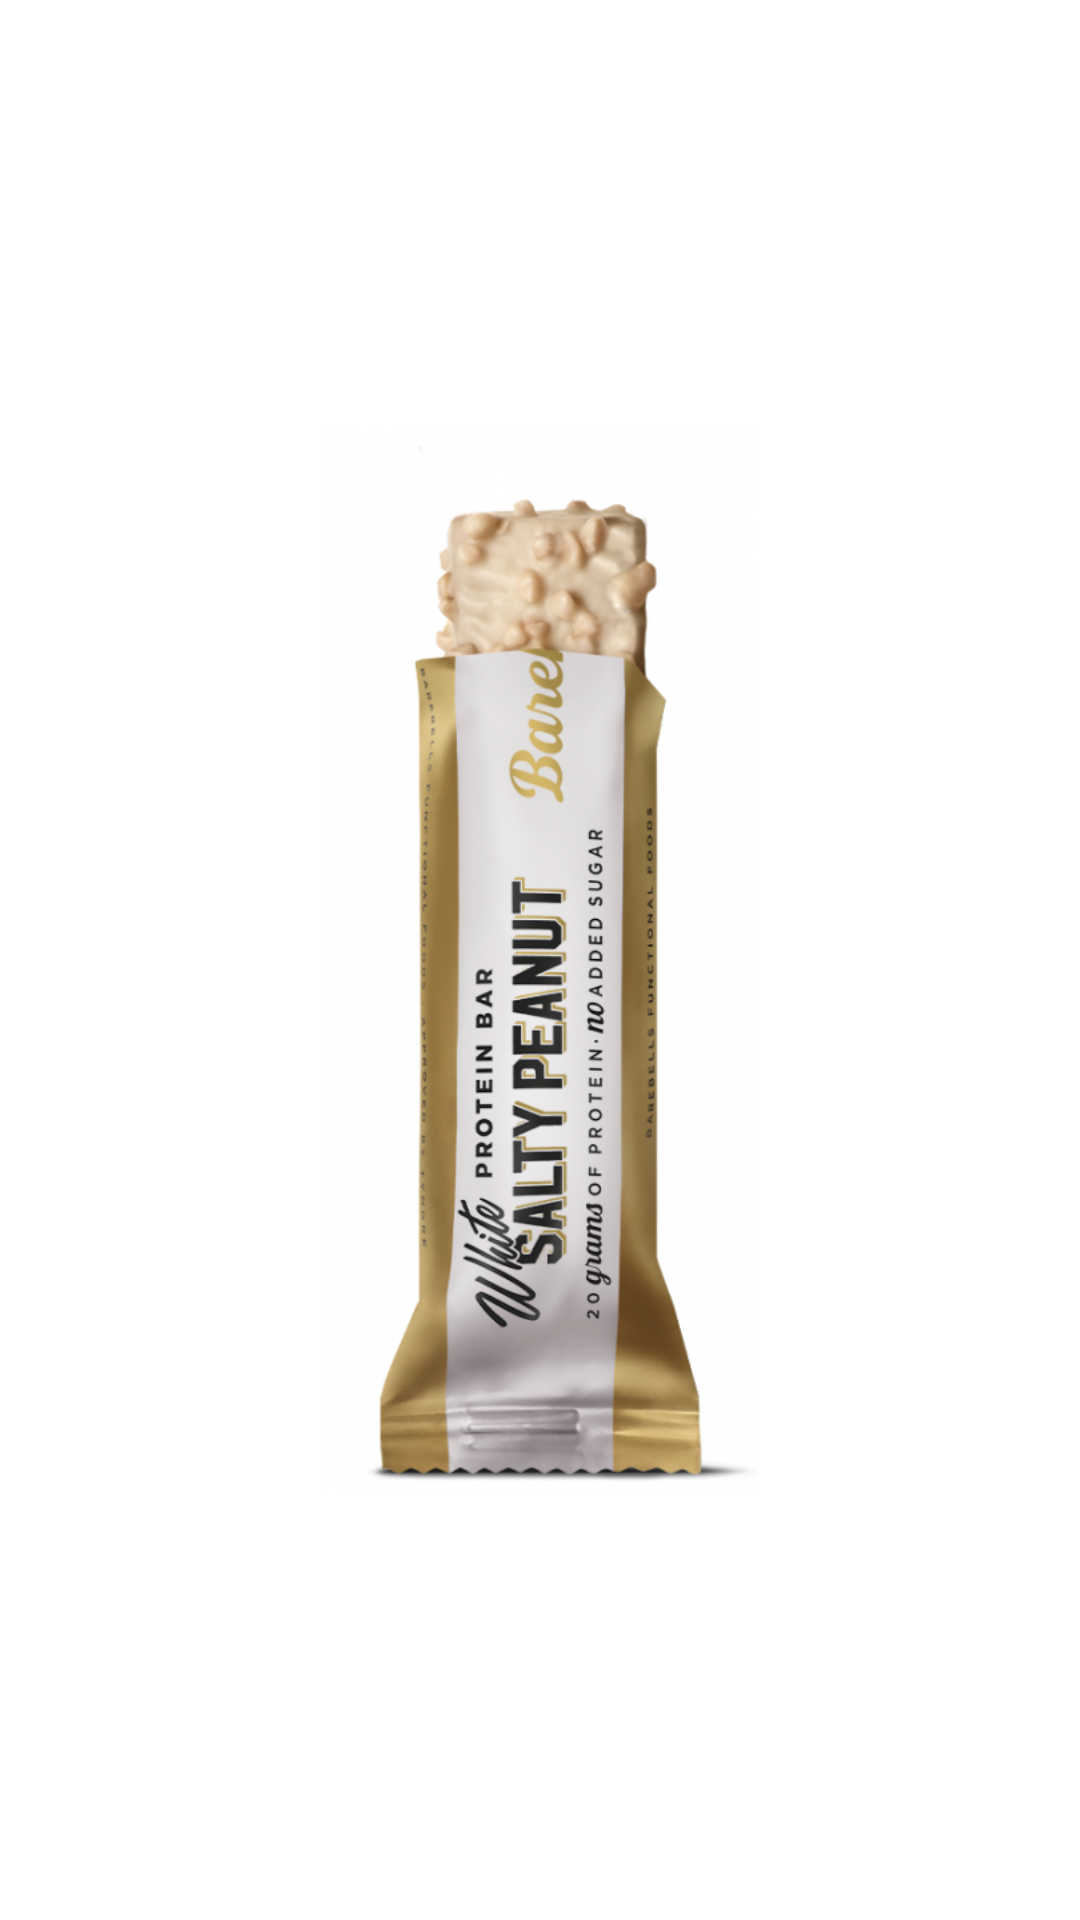 Barebells Salty Peanut 20g Protein Bar - Shop Diet & Fitness at H-E-B